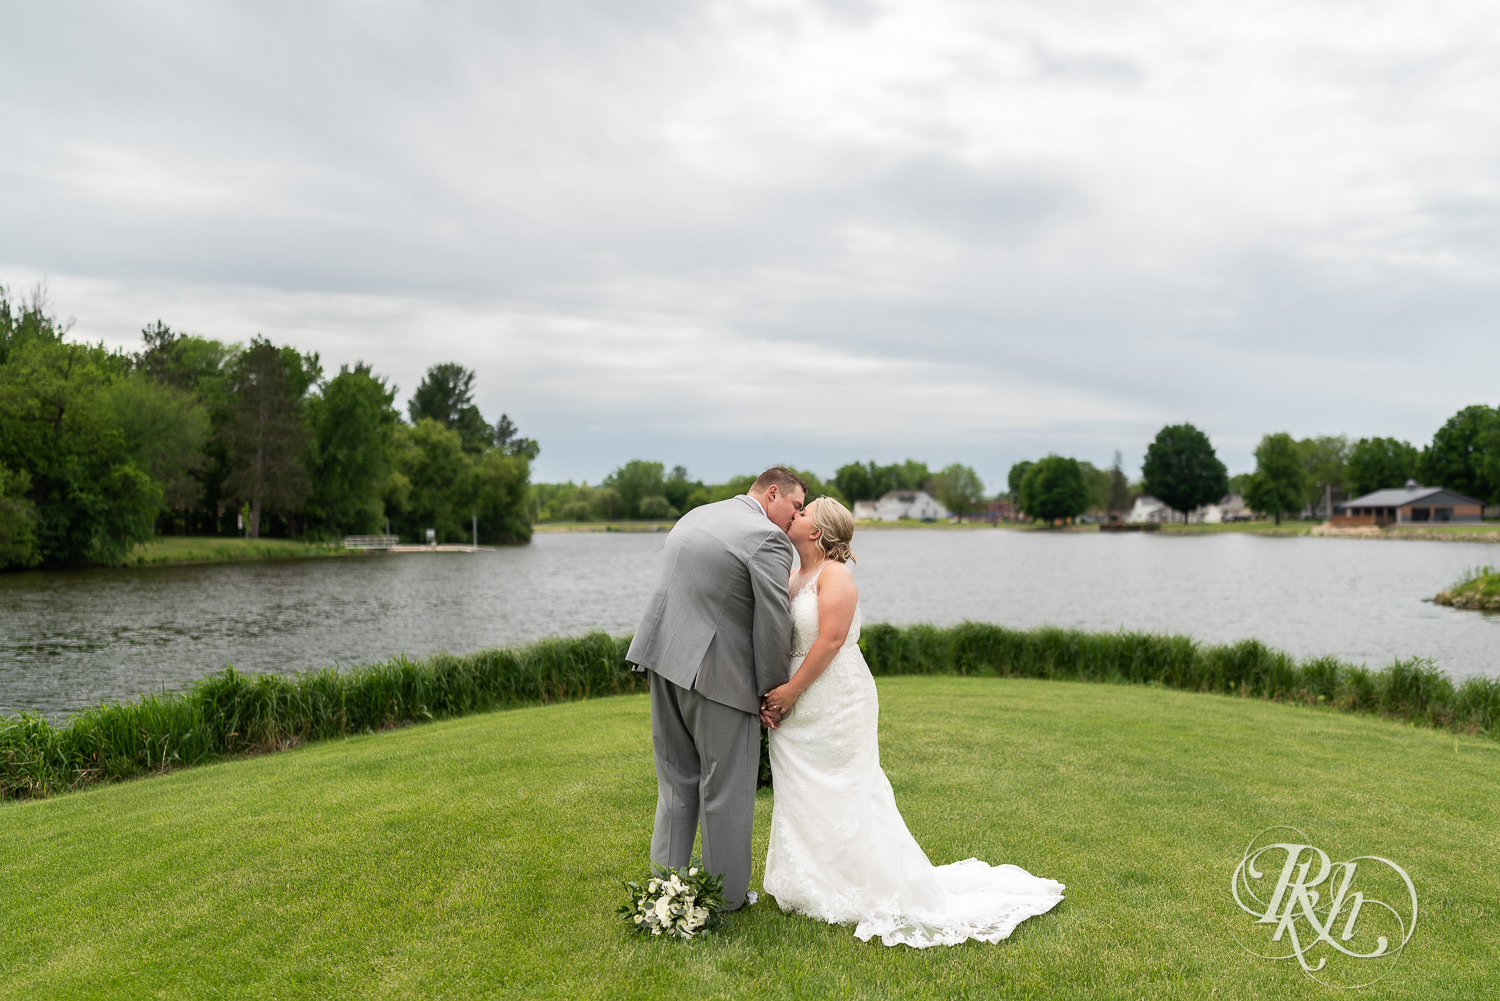 Bride and groom kiss in front of lake at Barn at Mirror Lake in Mondovi, Wisconsin.